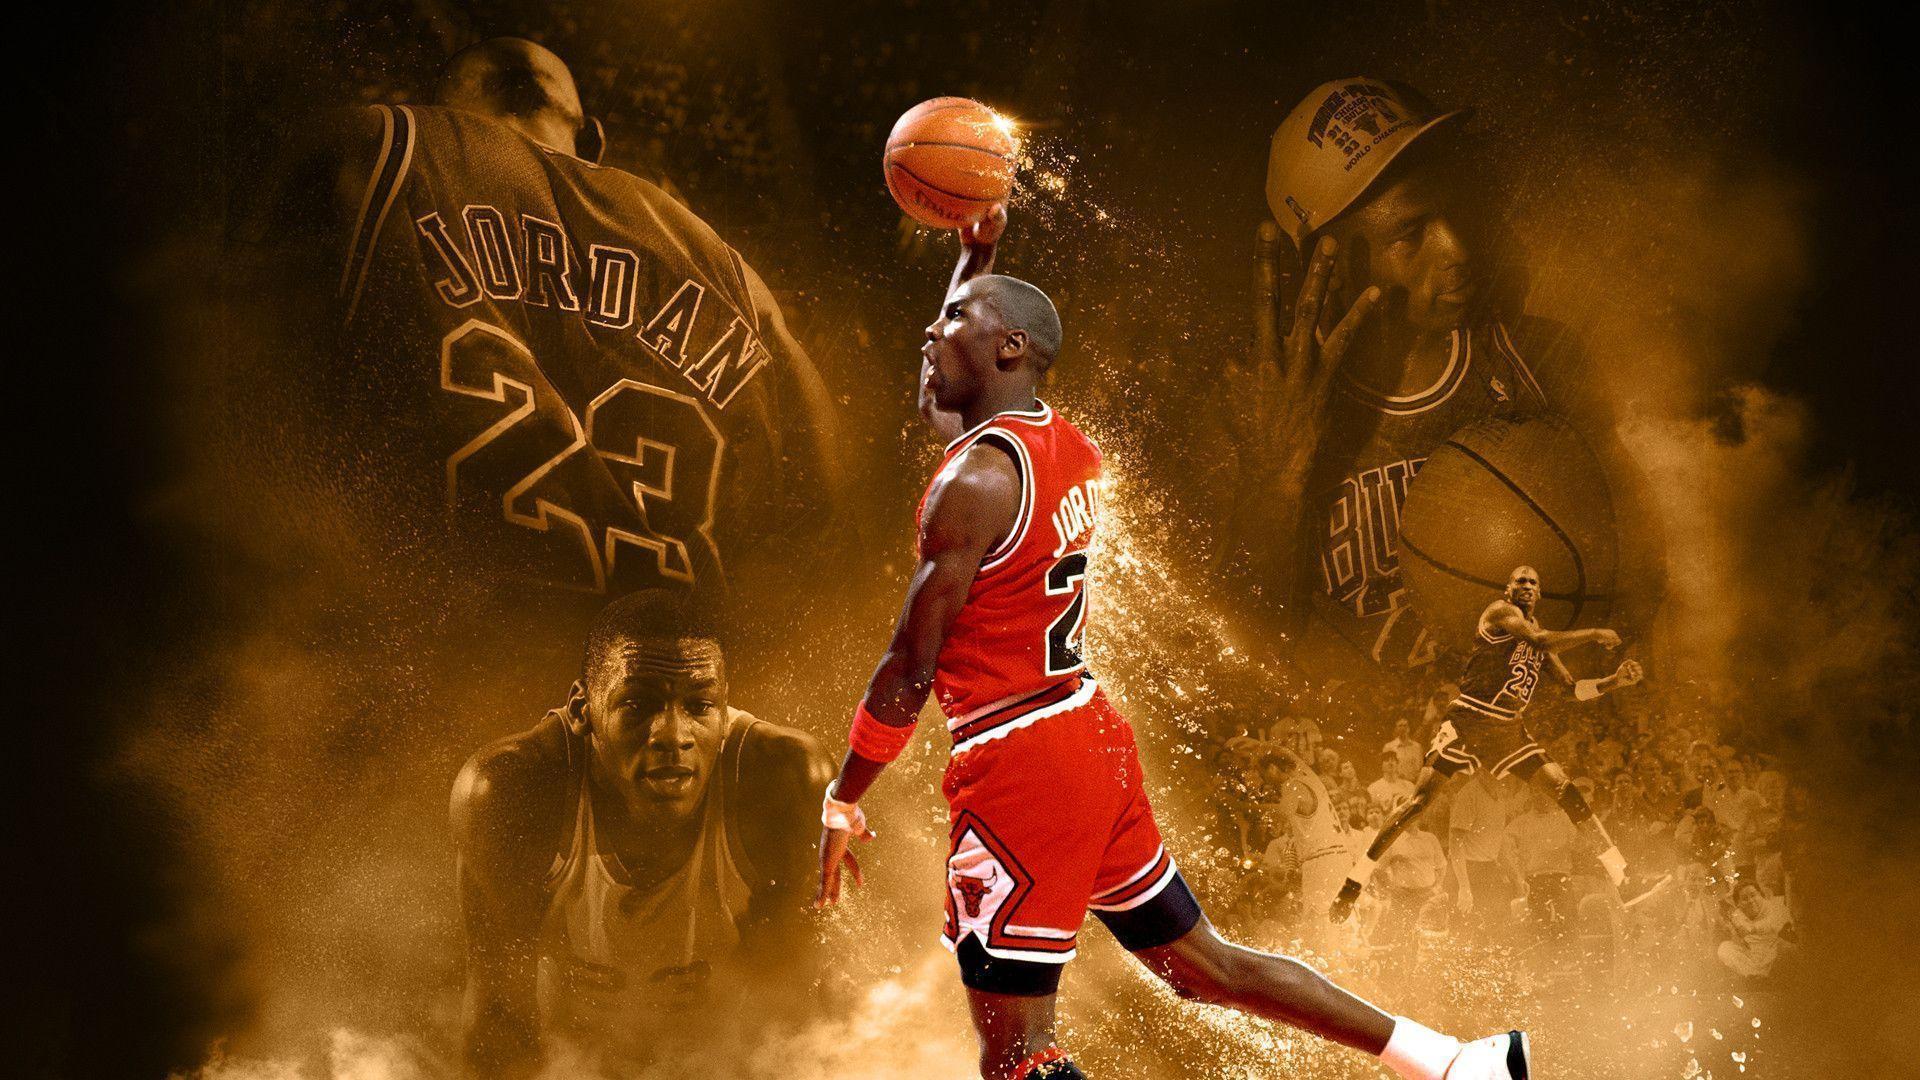 NBA Basketball Wallpaper HD Wallpaper. Download HD Wallpaper